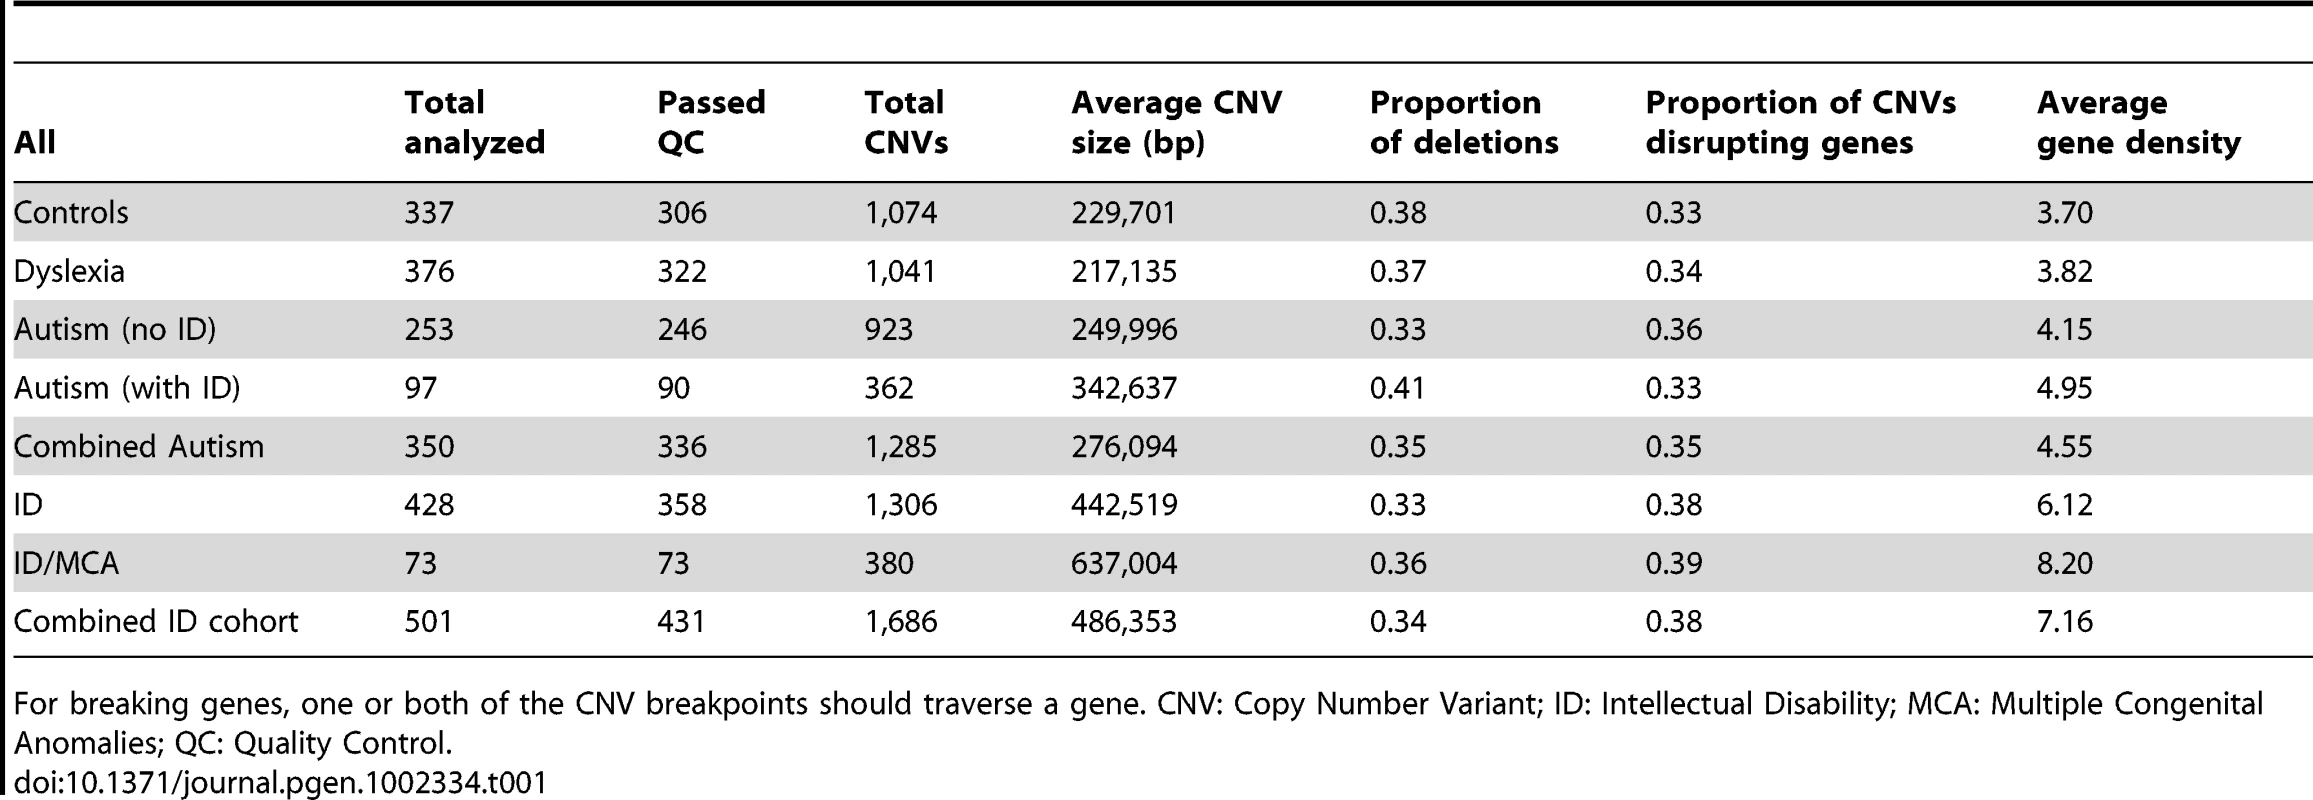 Summary of disease cohorts and CNV analysis.